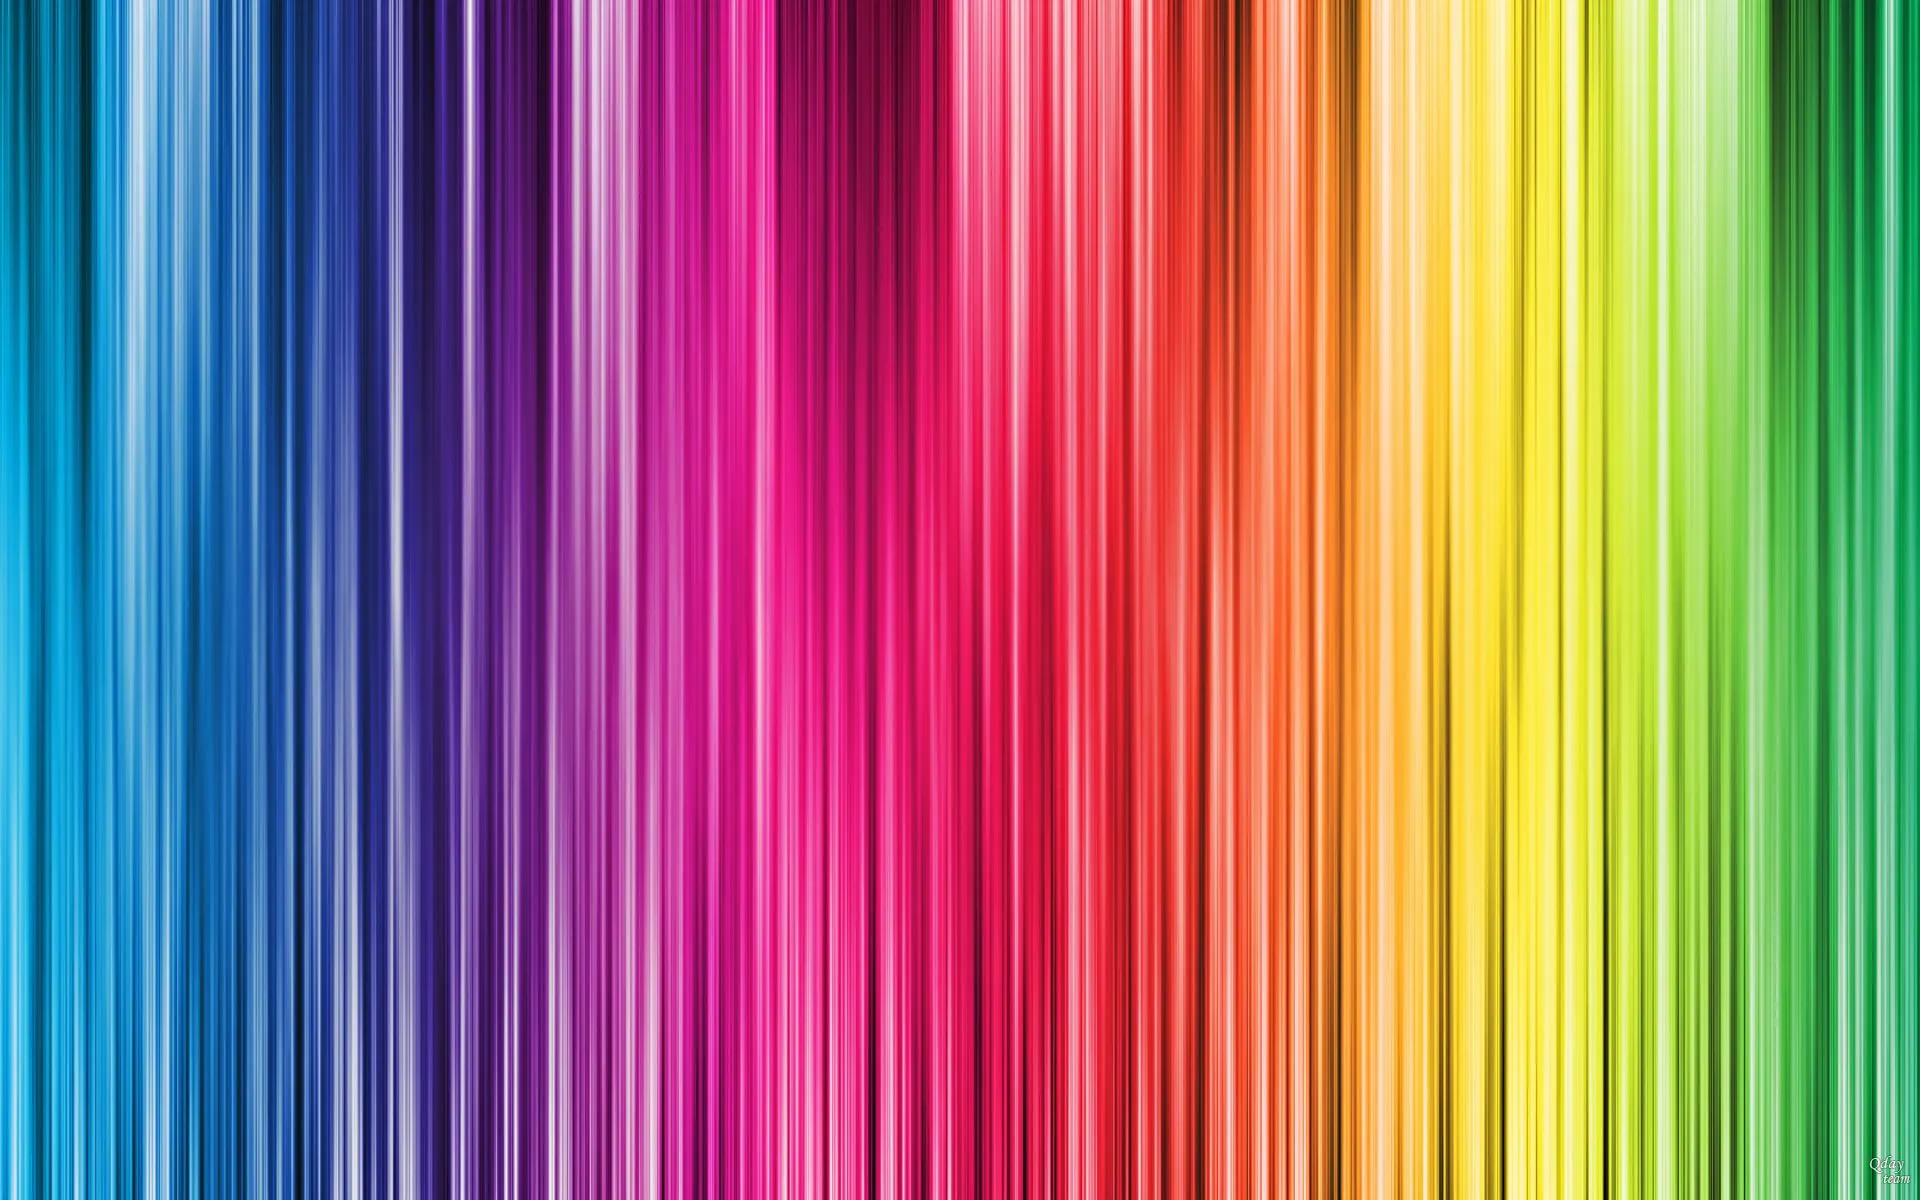 Arco Iris de Colores. Wallpapers de Colores - Wallpapers